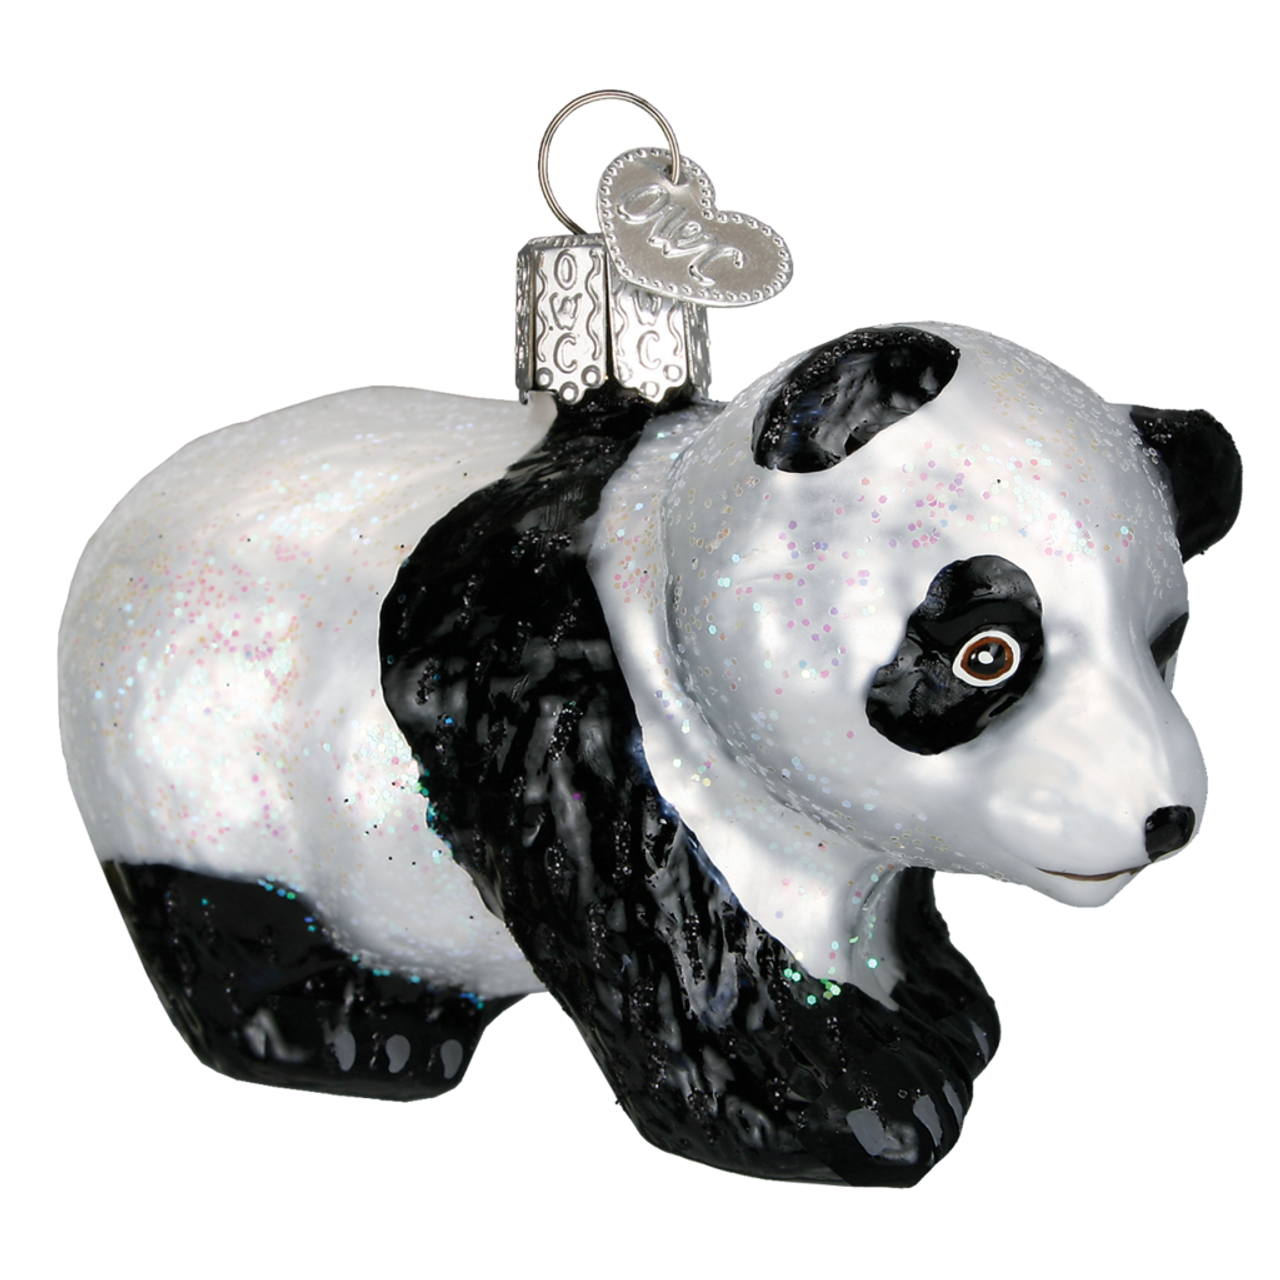 Panda Cub Glass Ornament by Old World Christmas